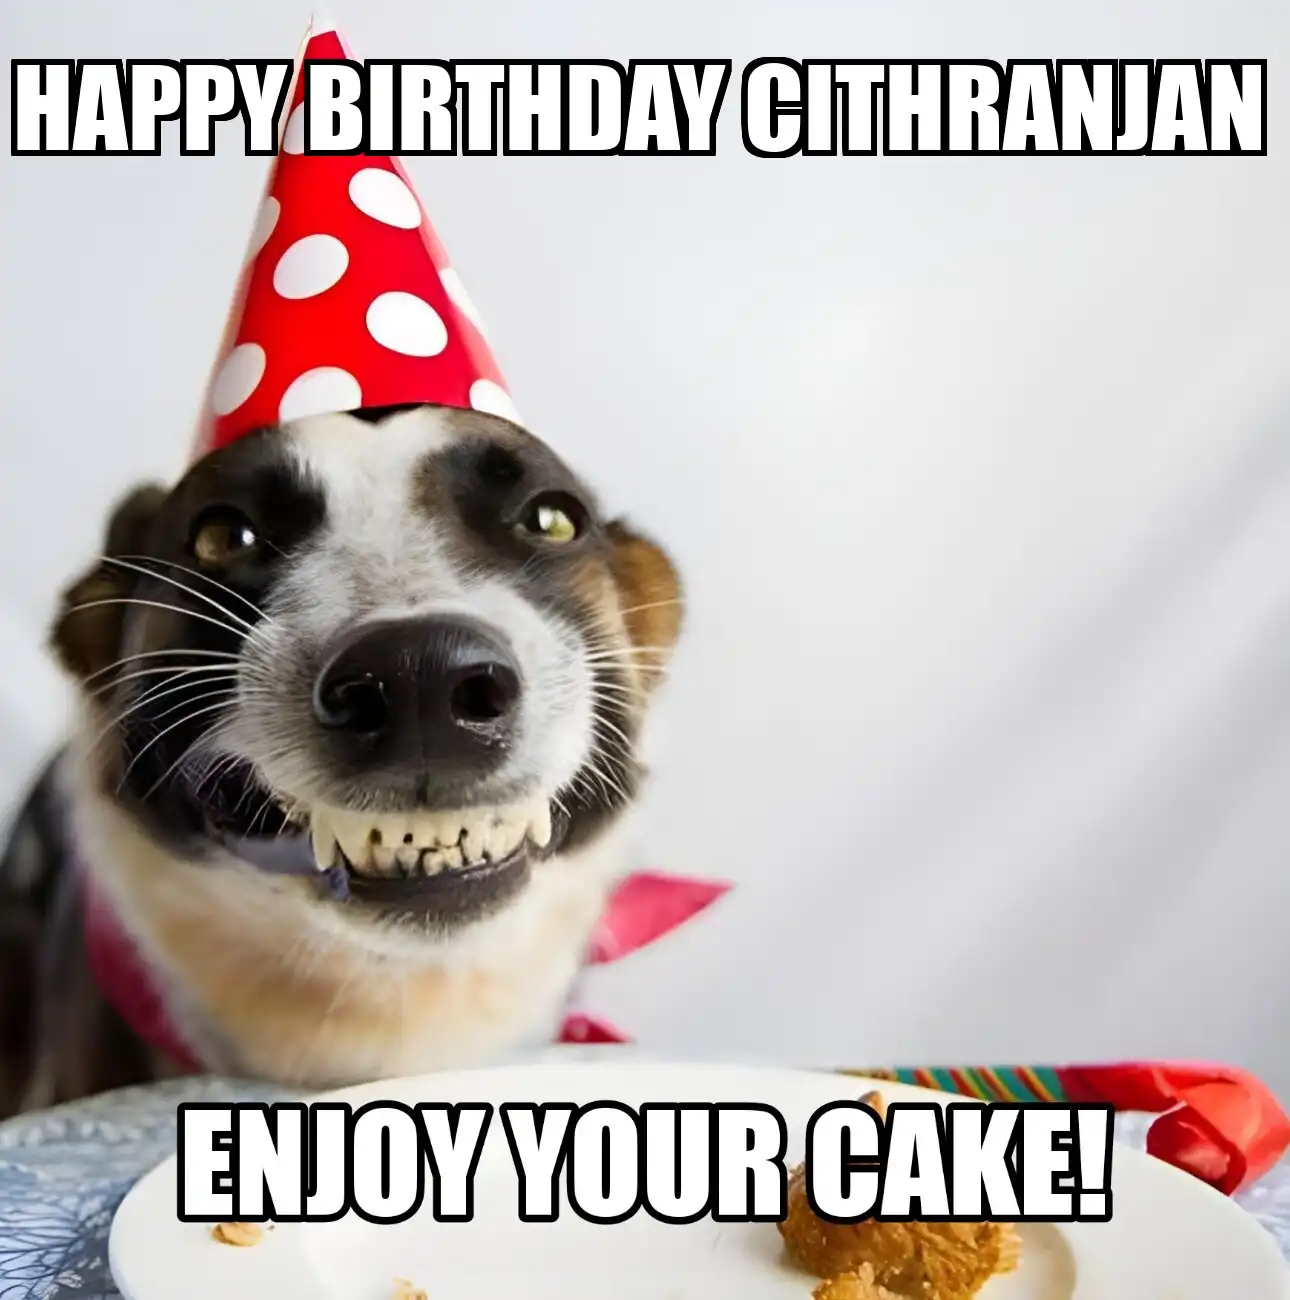 Happy Birthday Cithranjan Enjoy Your Cake Dog Meme